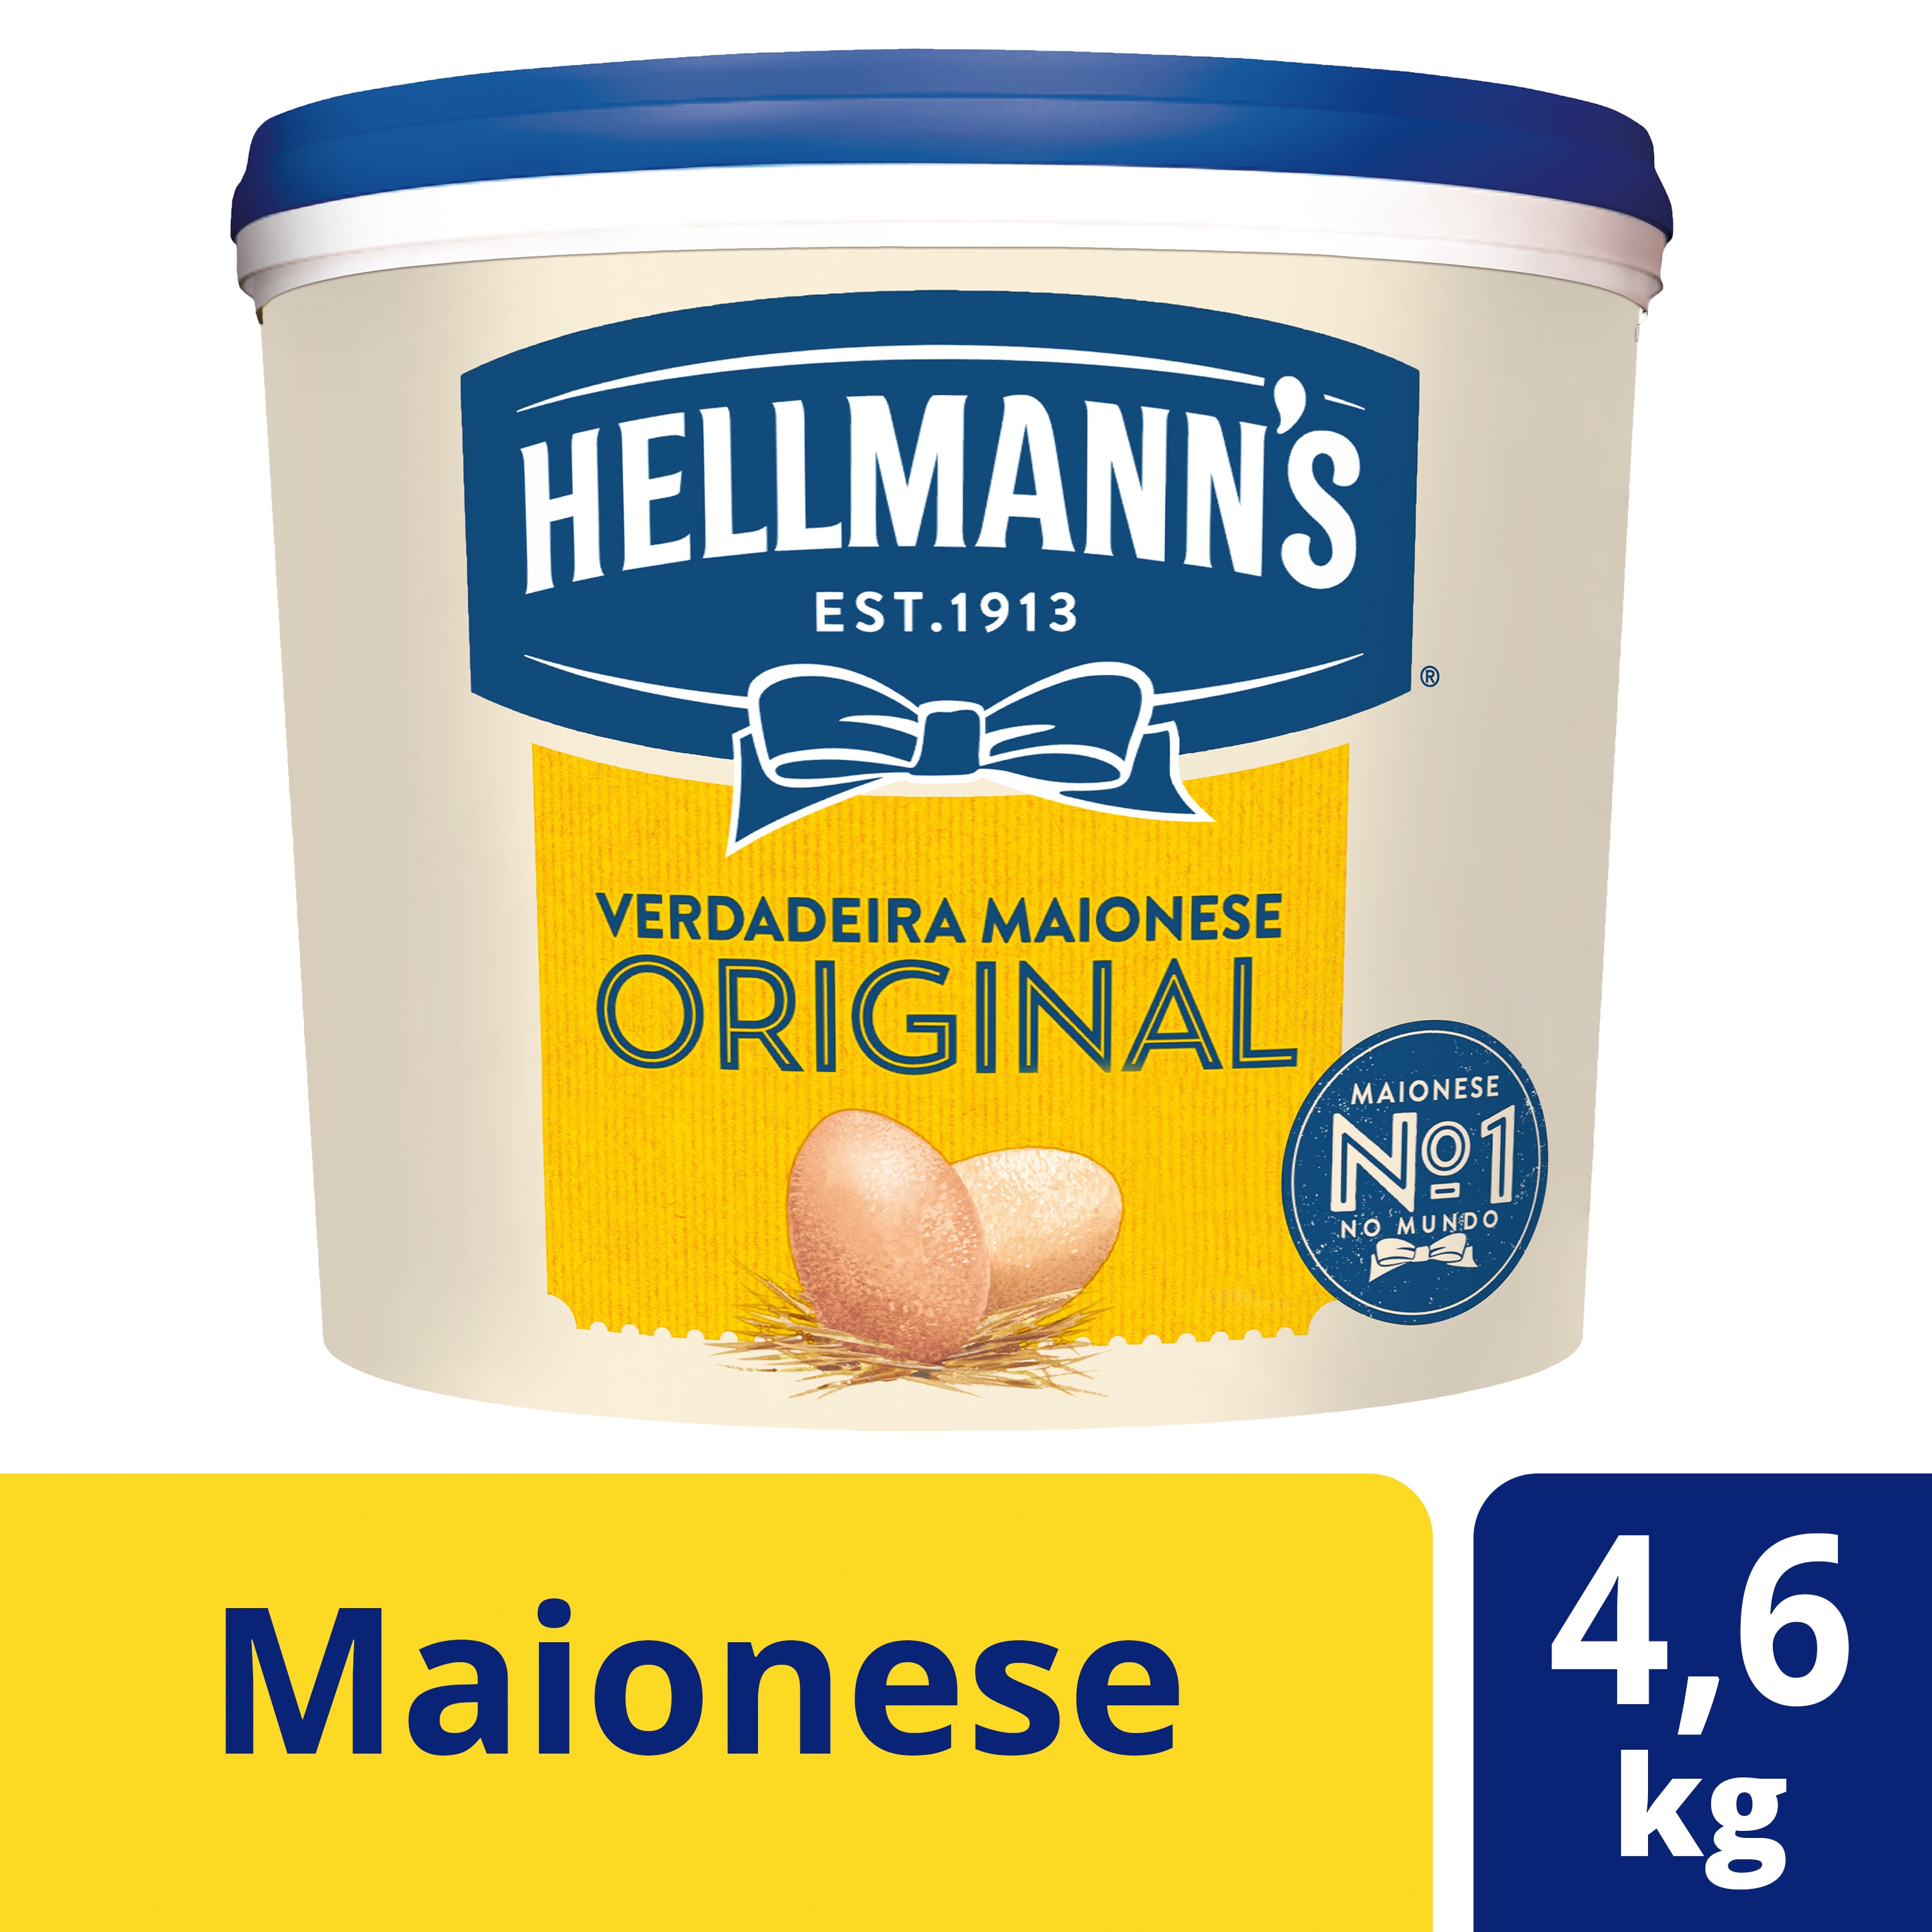 Hellmann’s Maionese  Original - Hellmann's é a maionese 100% genuína, 100% de confiança.